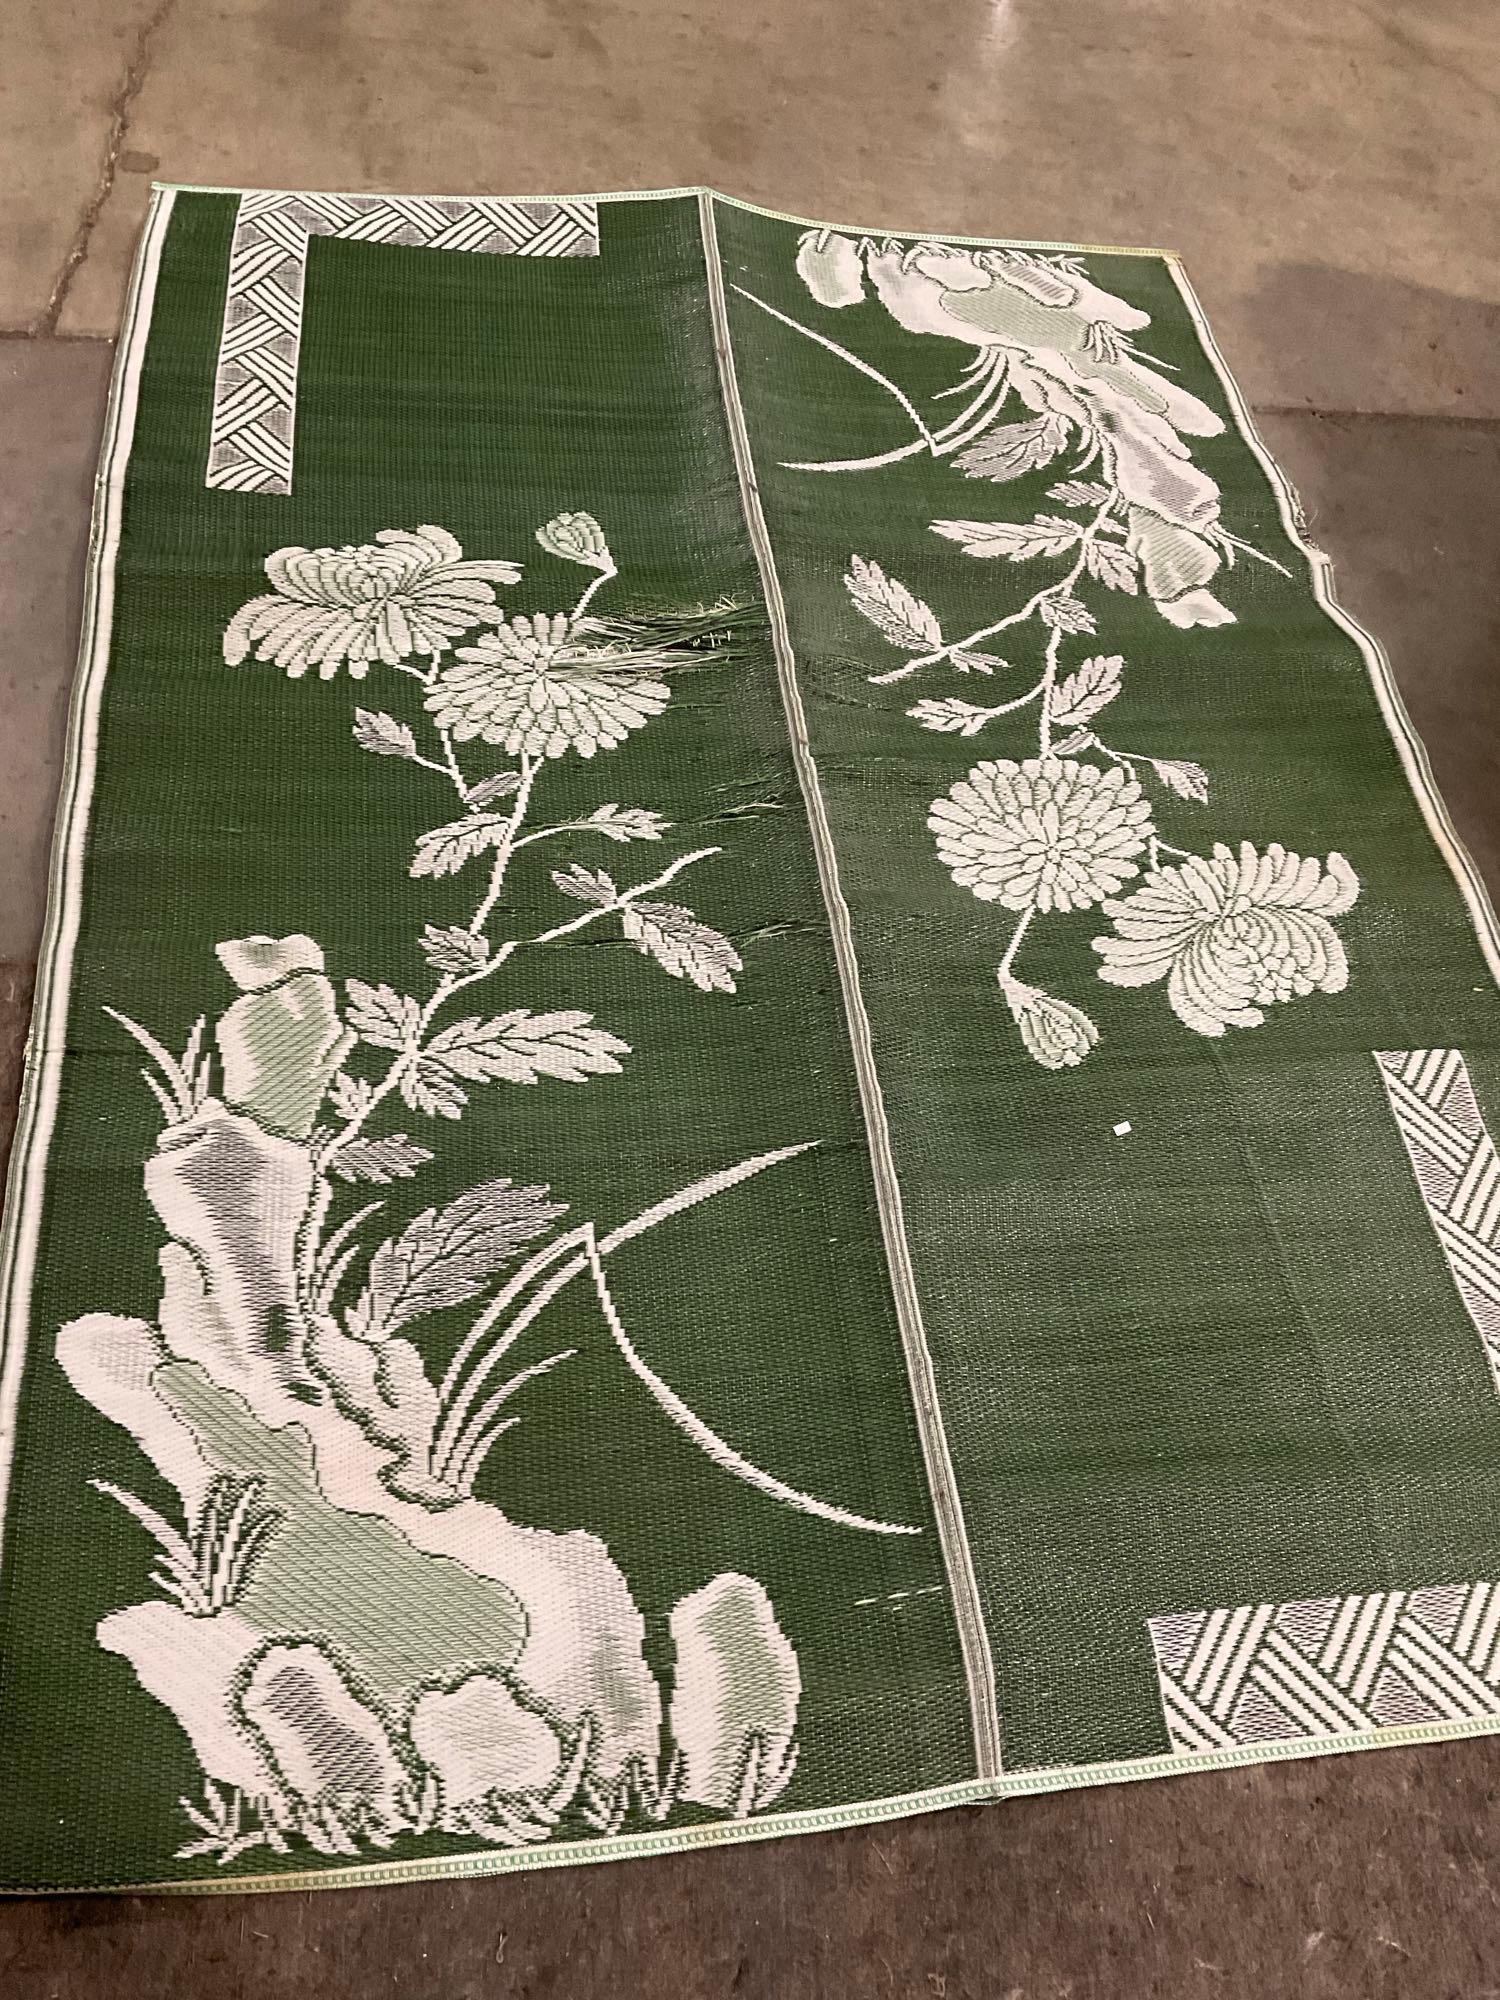 Large Tatami Mat, w/ Chrysanthemum floral pattern, some wear in the center